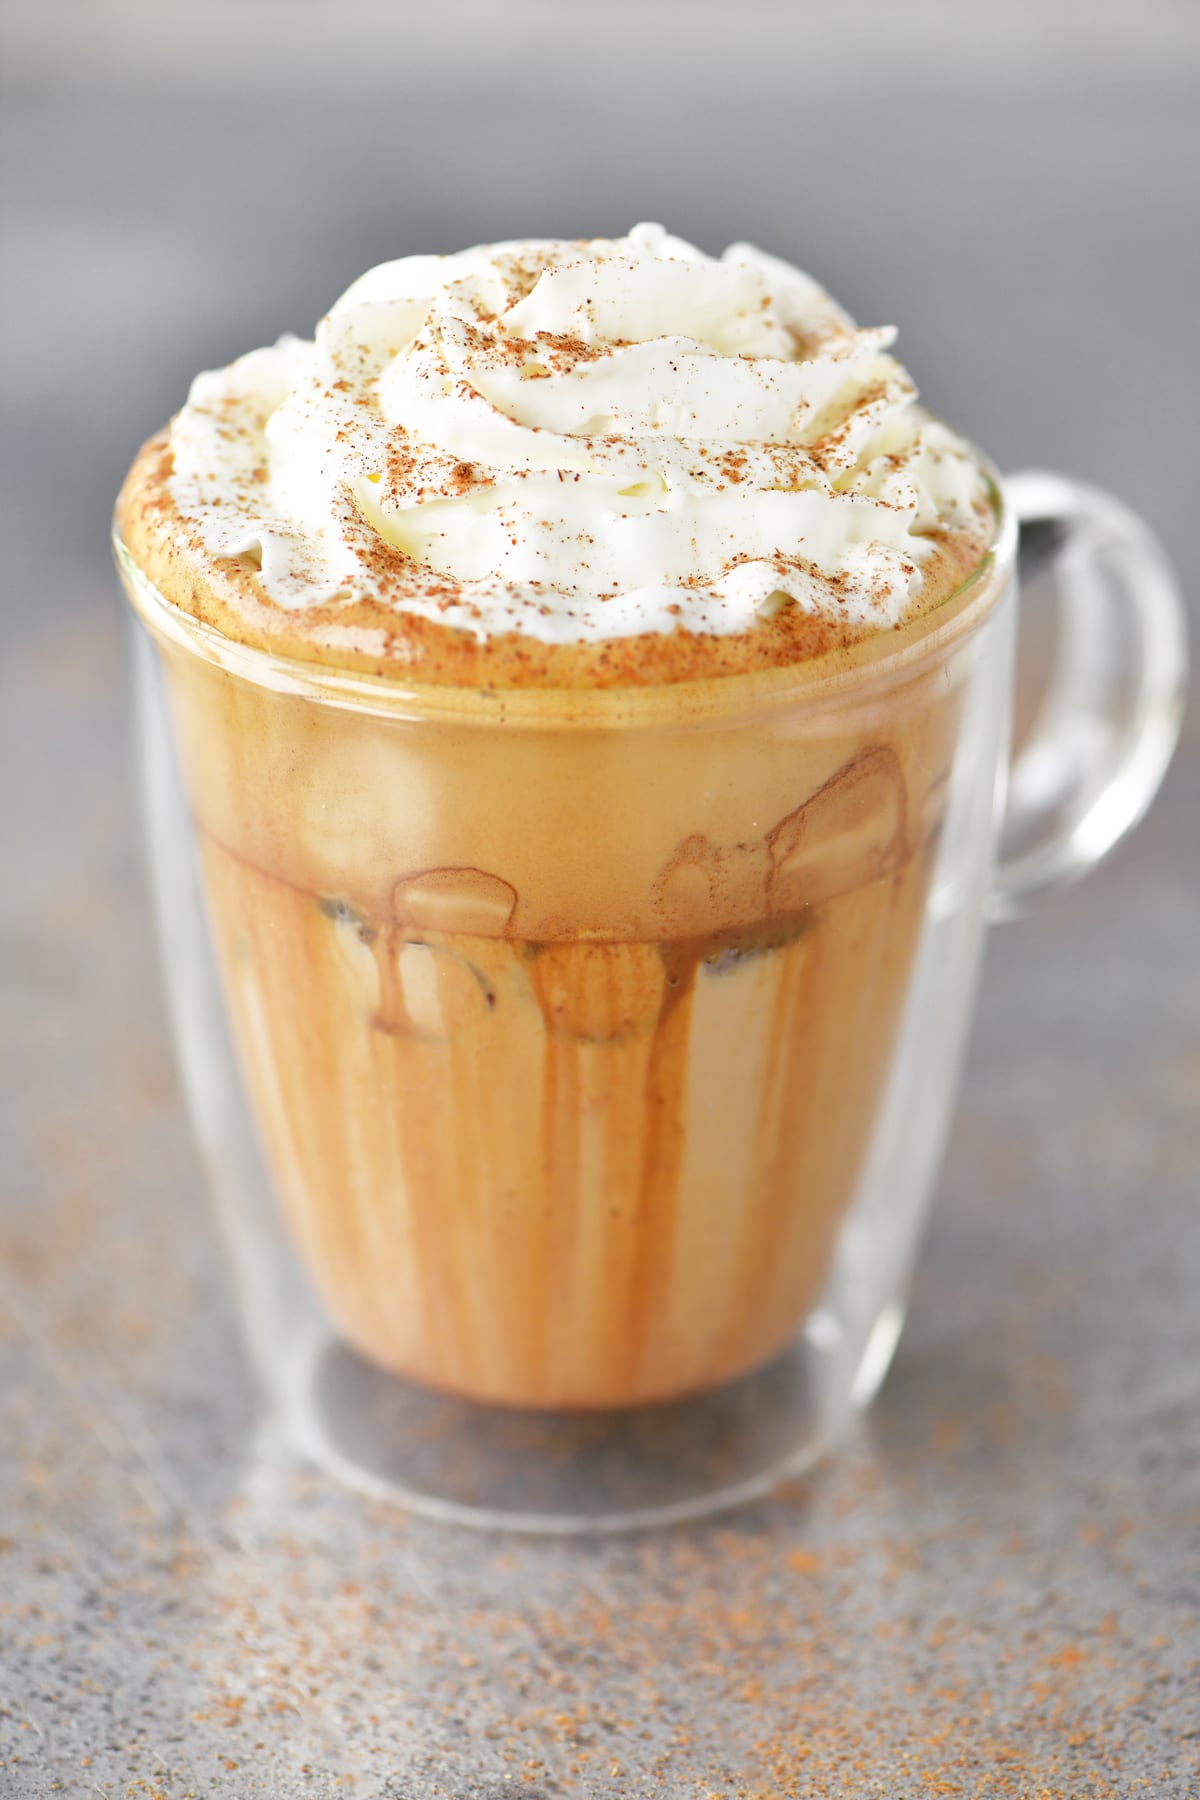 Iced pumpkin spice latte in a glass mug.